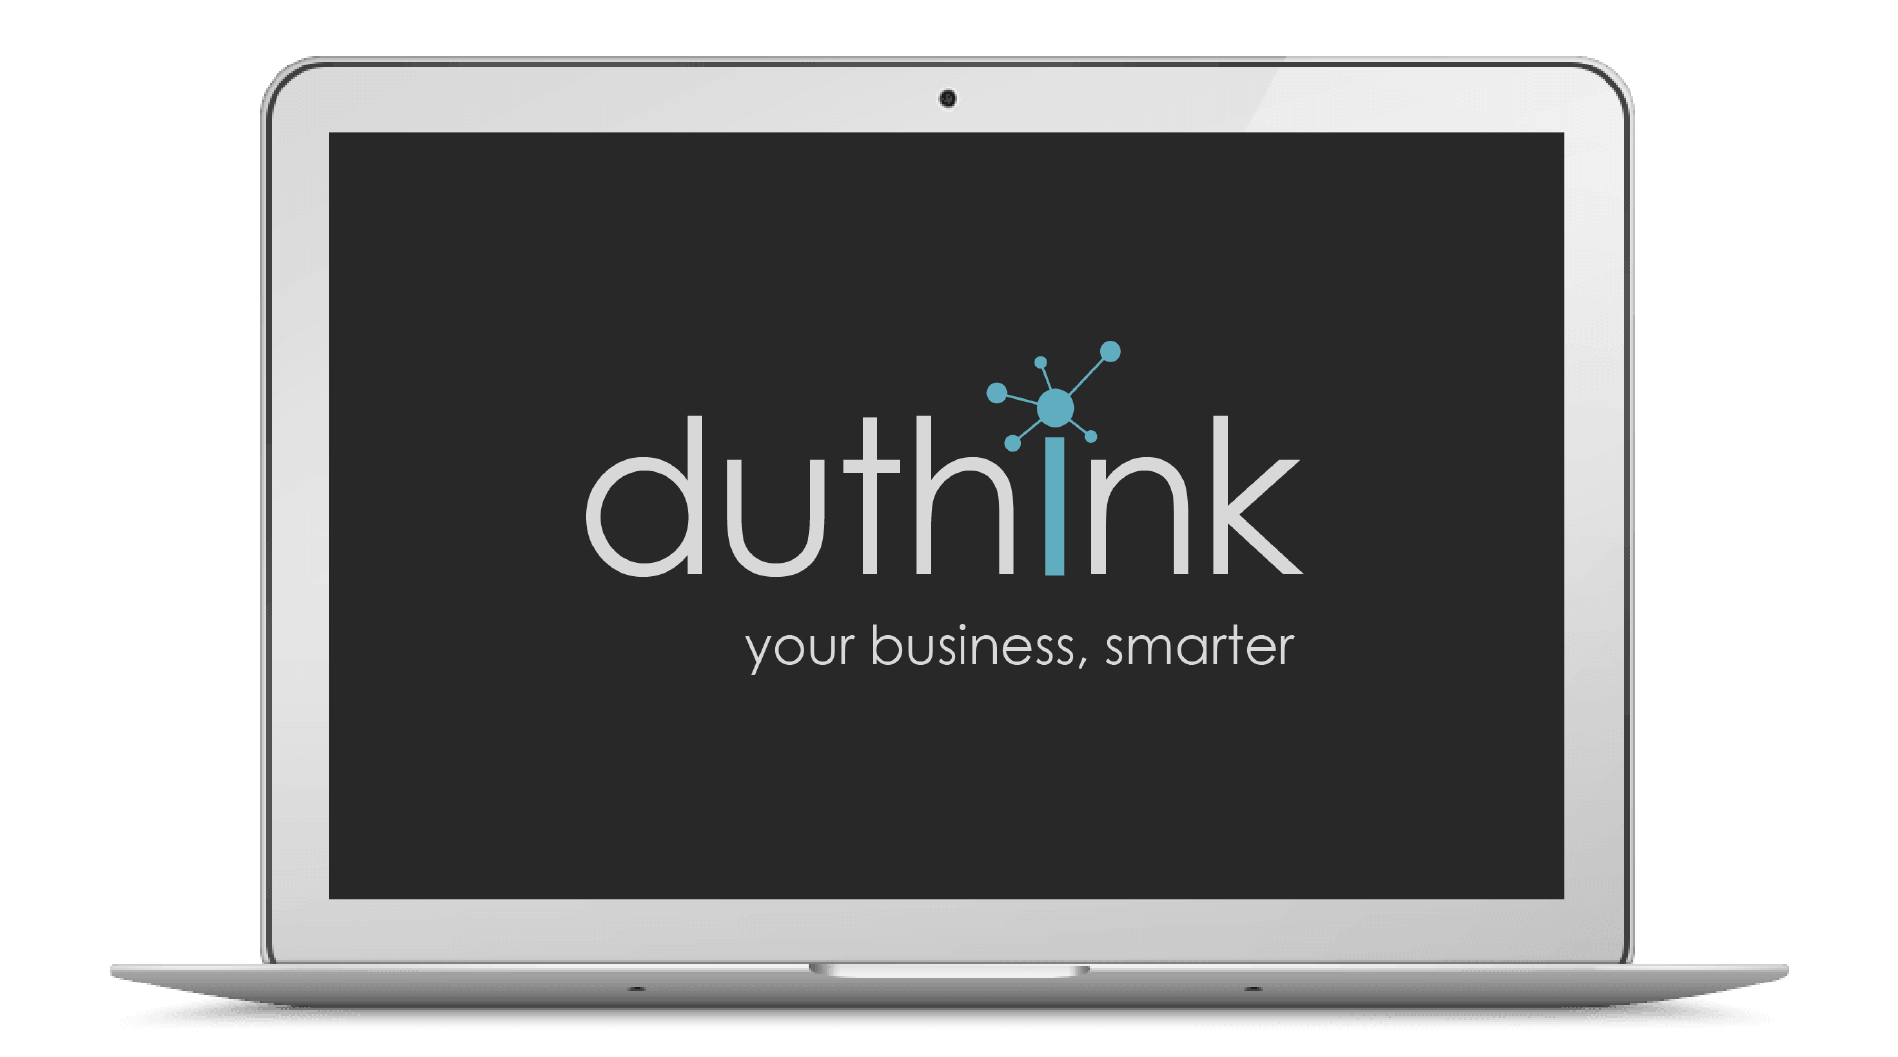 duthink: your business, smarter.